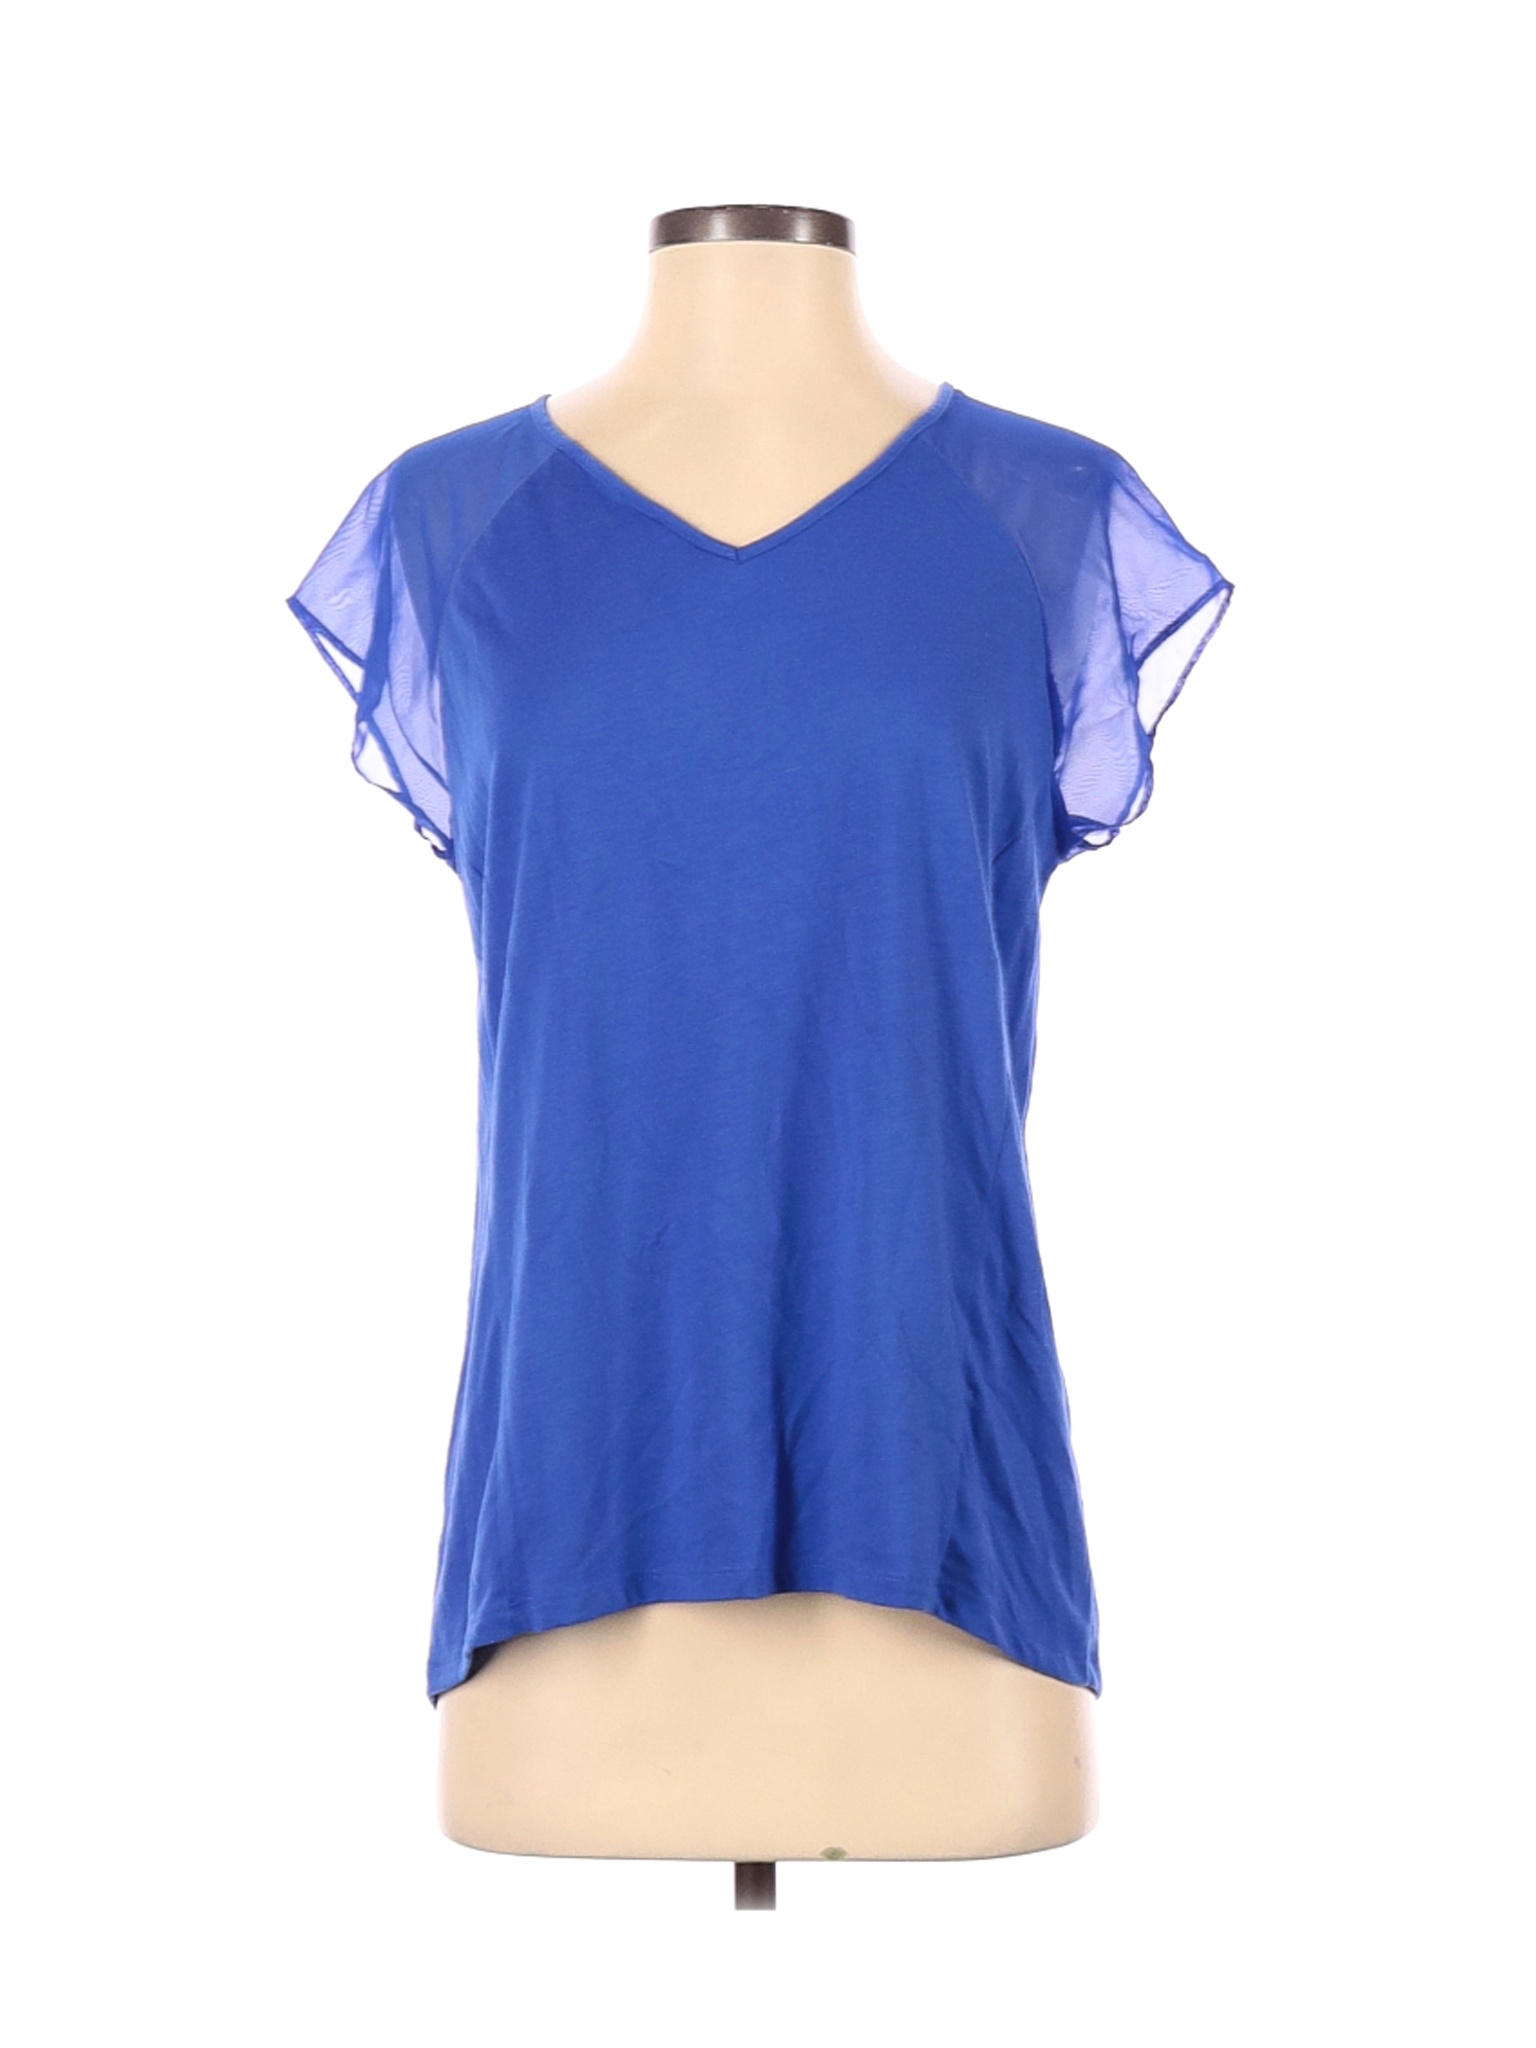 Cato Women Blue Short Sleeve Top S | eBay